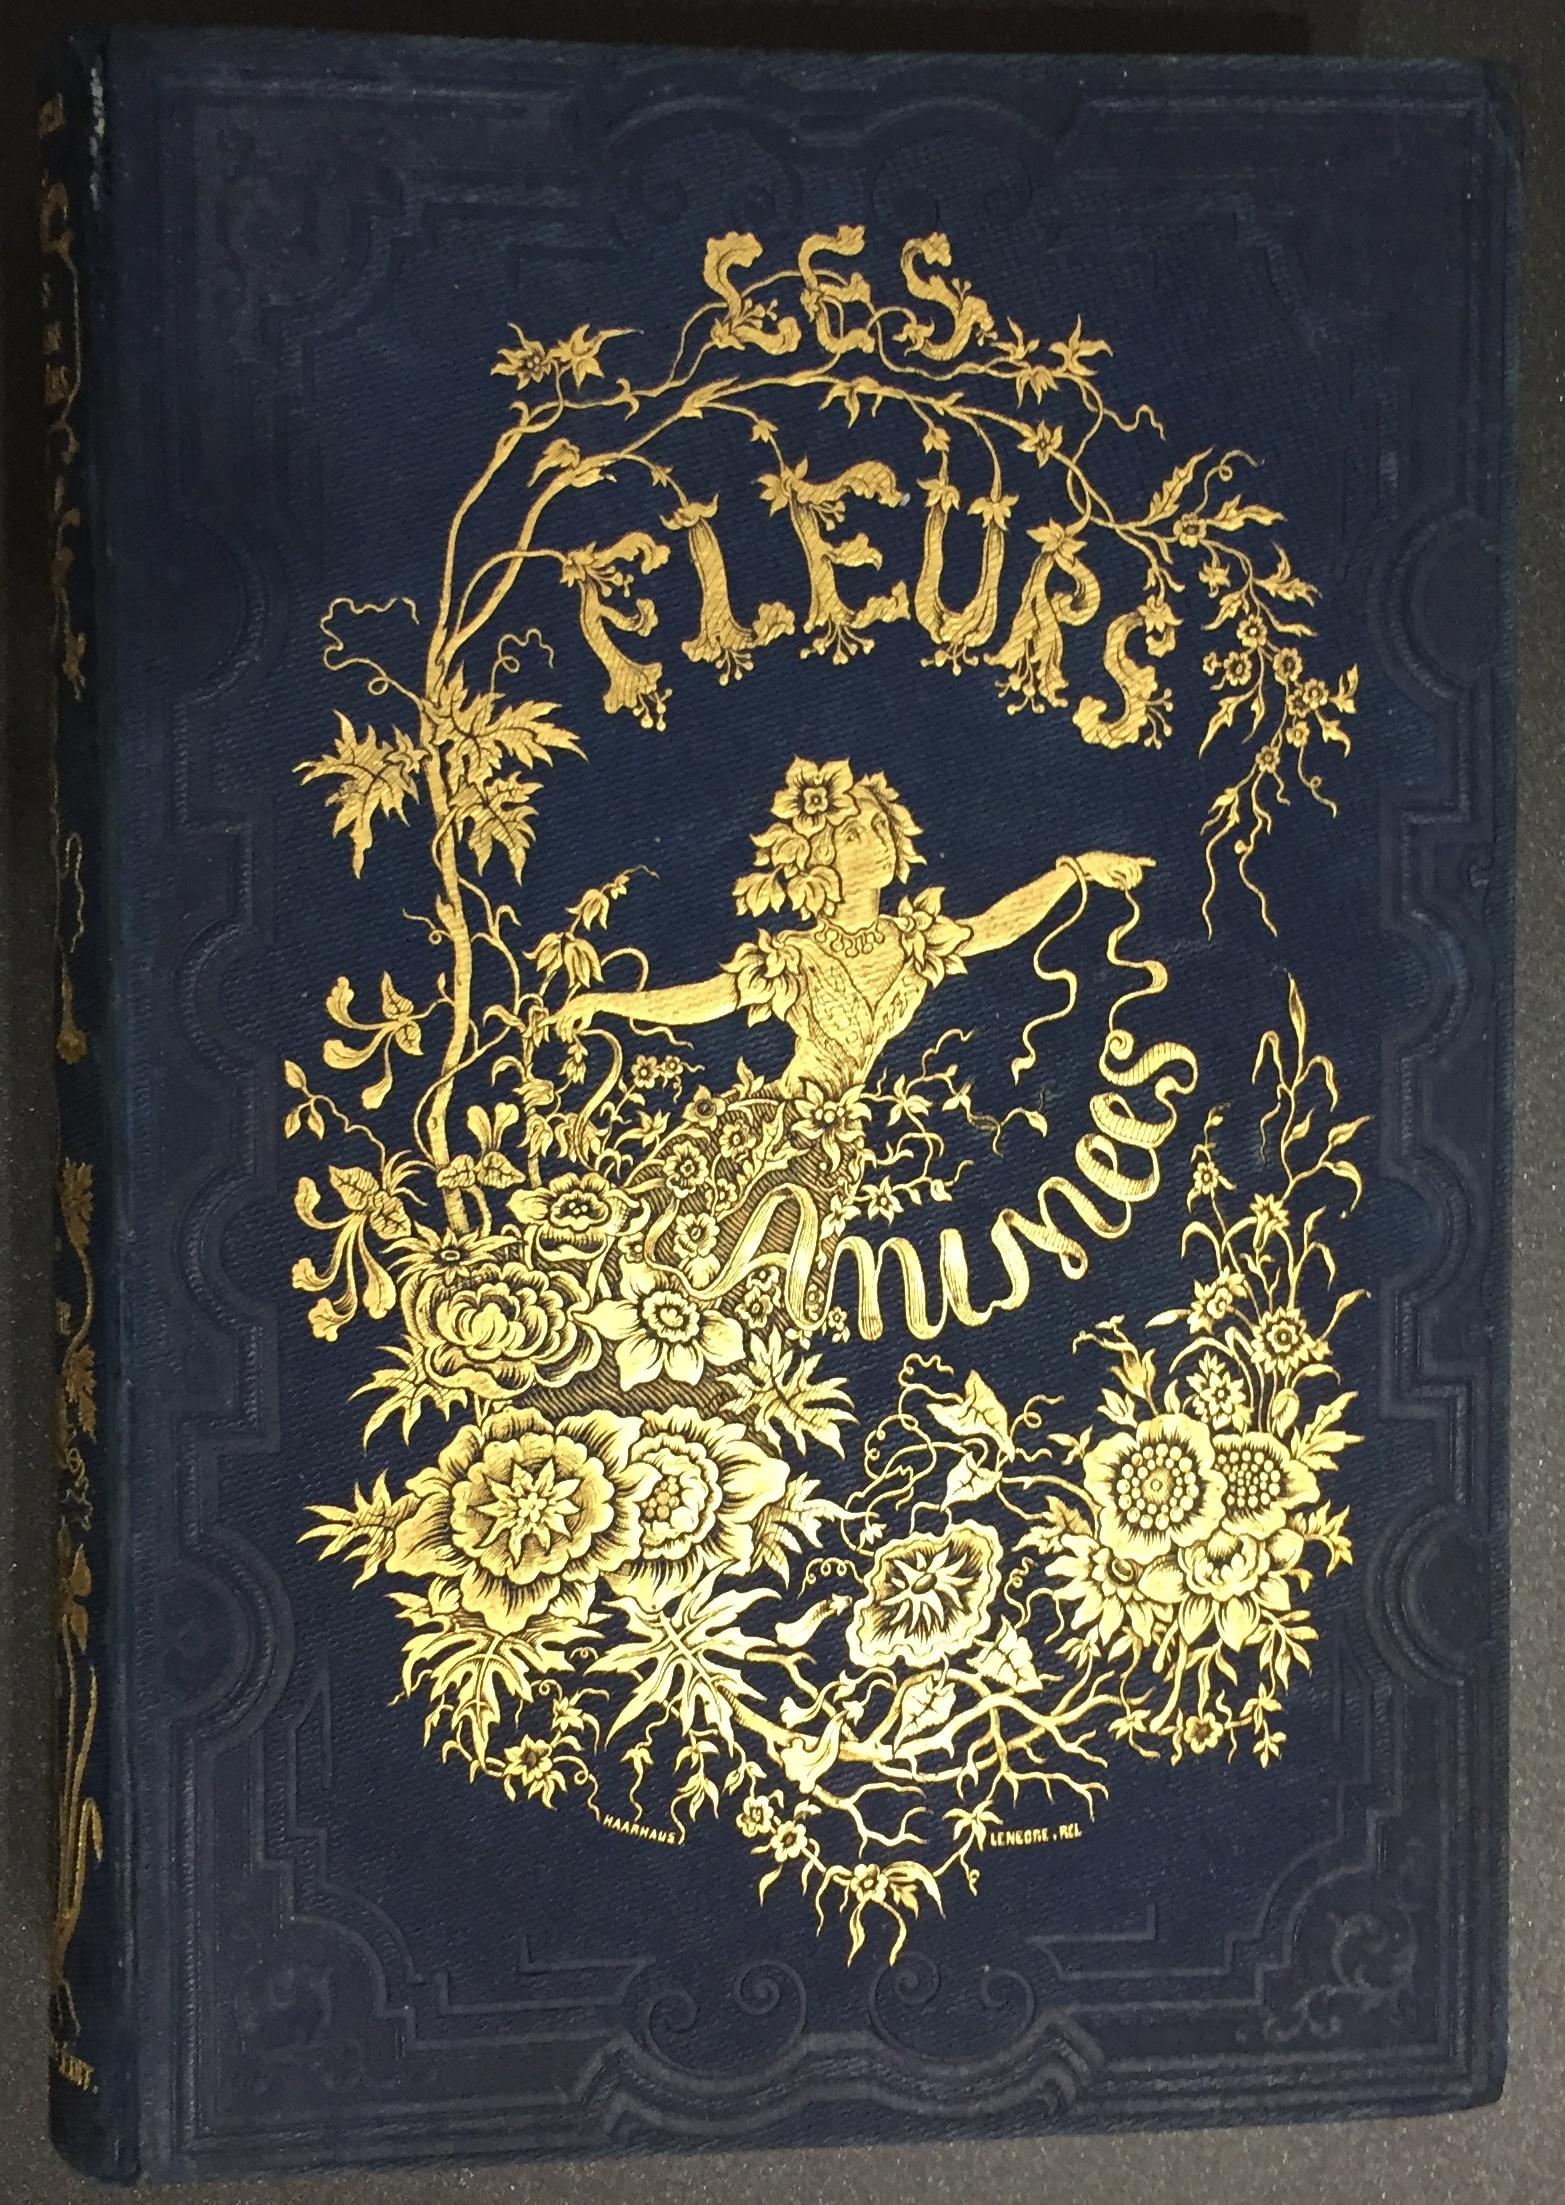 Les Fleurs Animées - Original Edition Illustrated by J.J. Grandville - 1847 - Art by J. J. Grandville